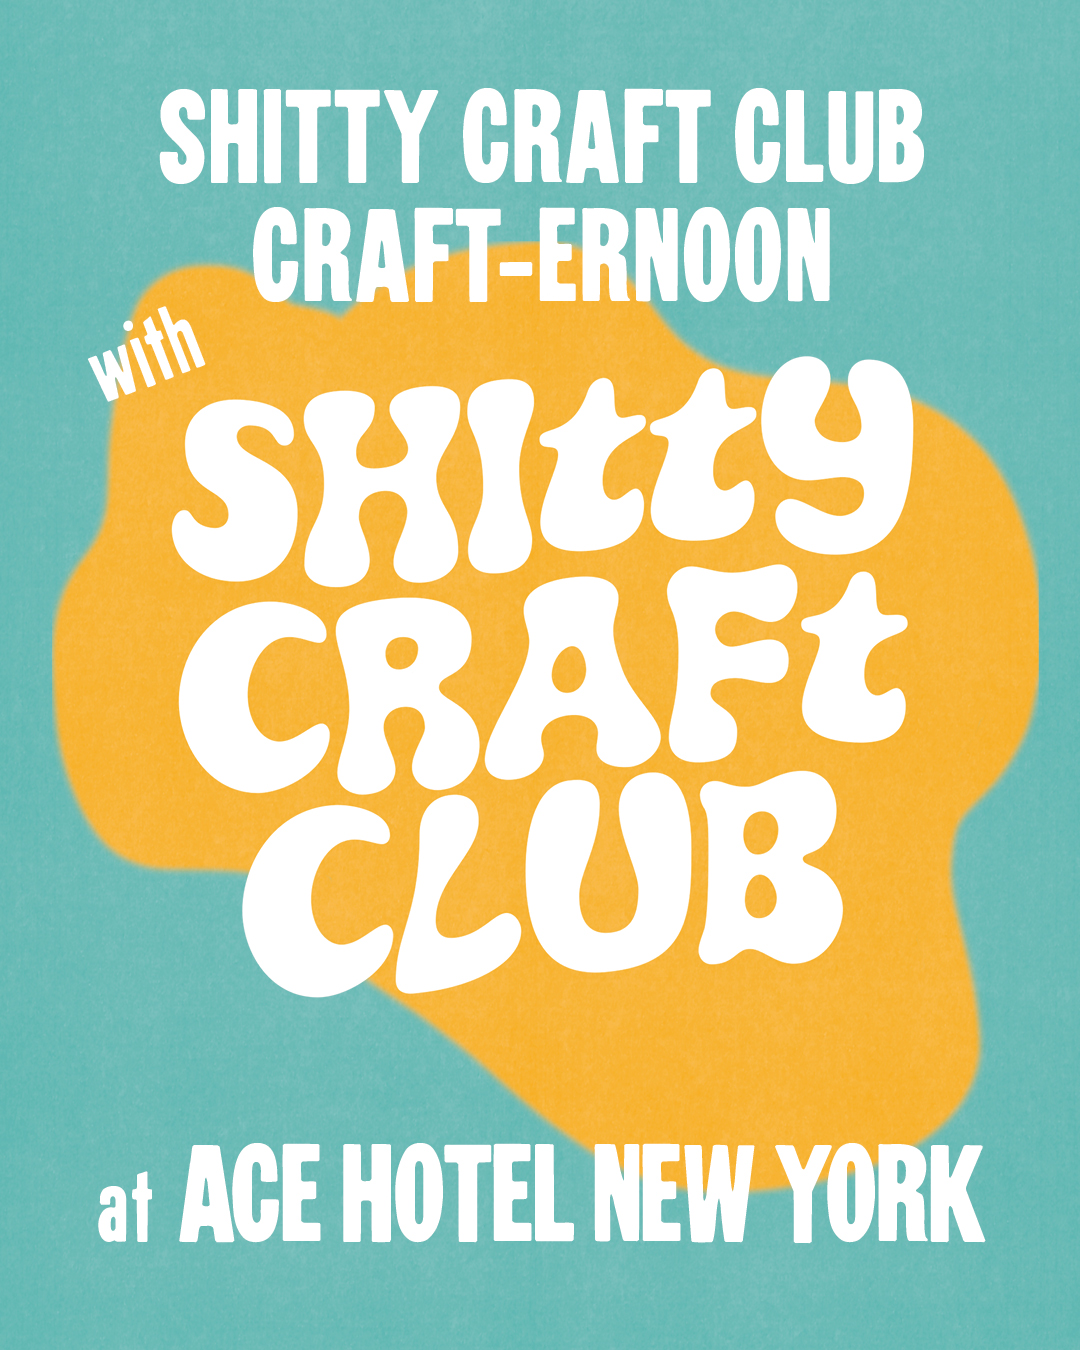 Shitty Craft Club promo